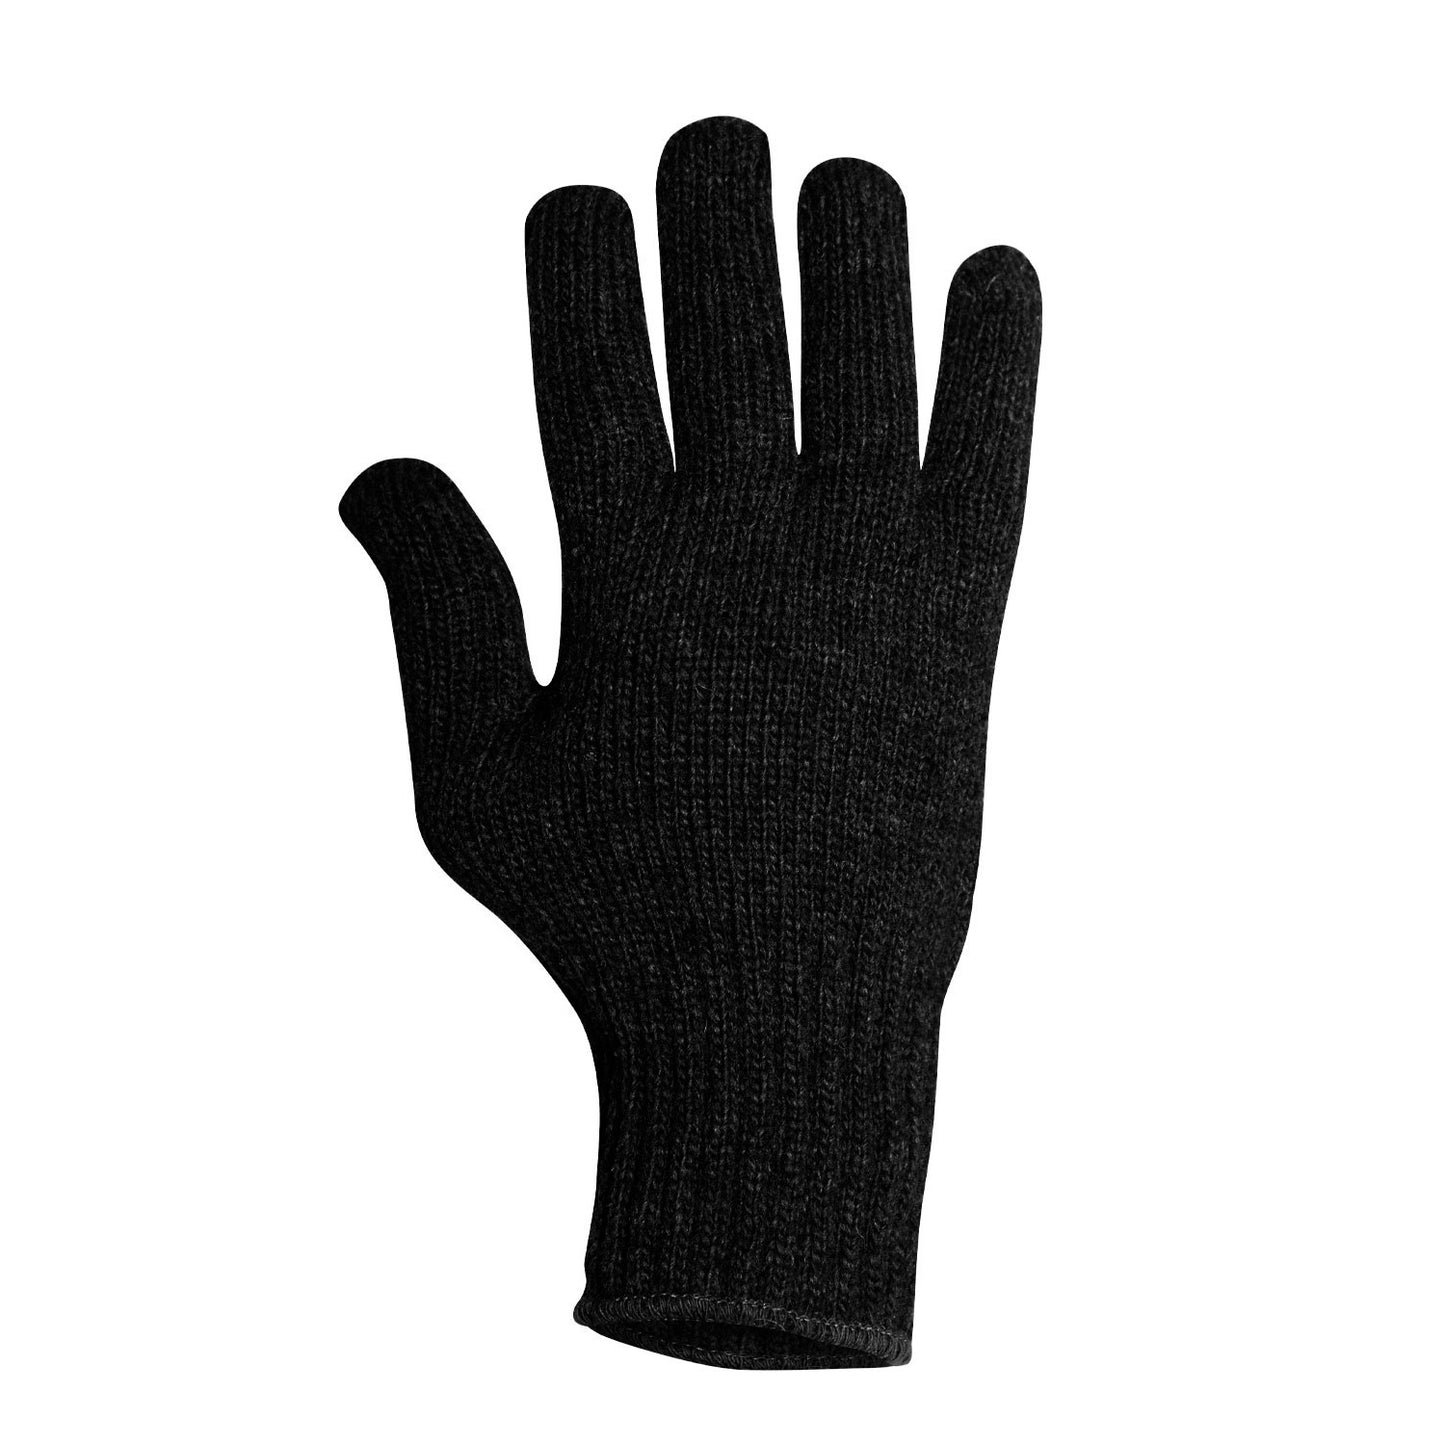 Wool - Black Knit Gloves